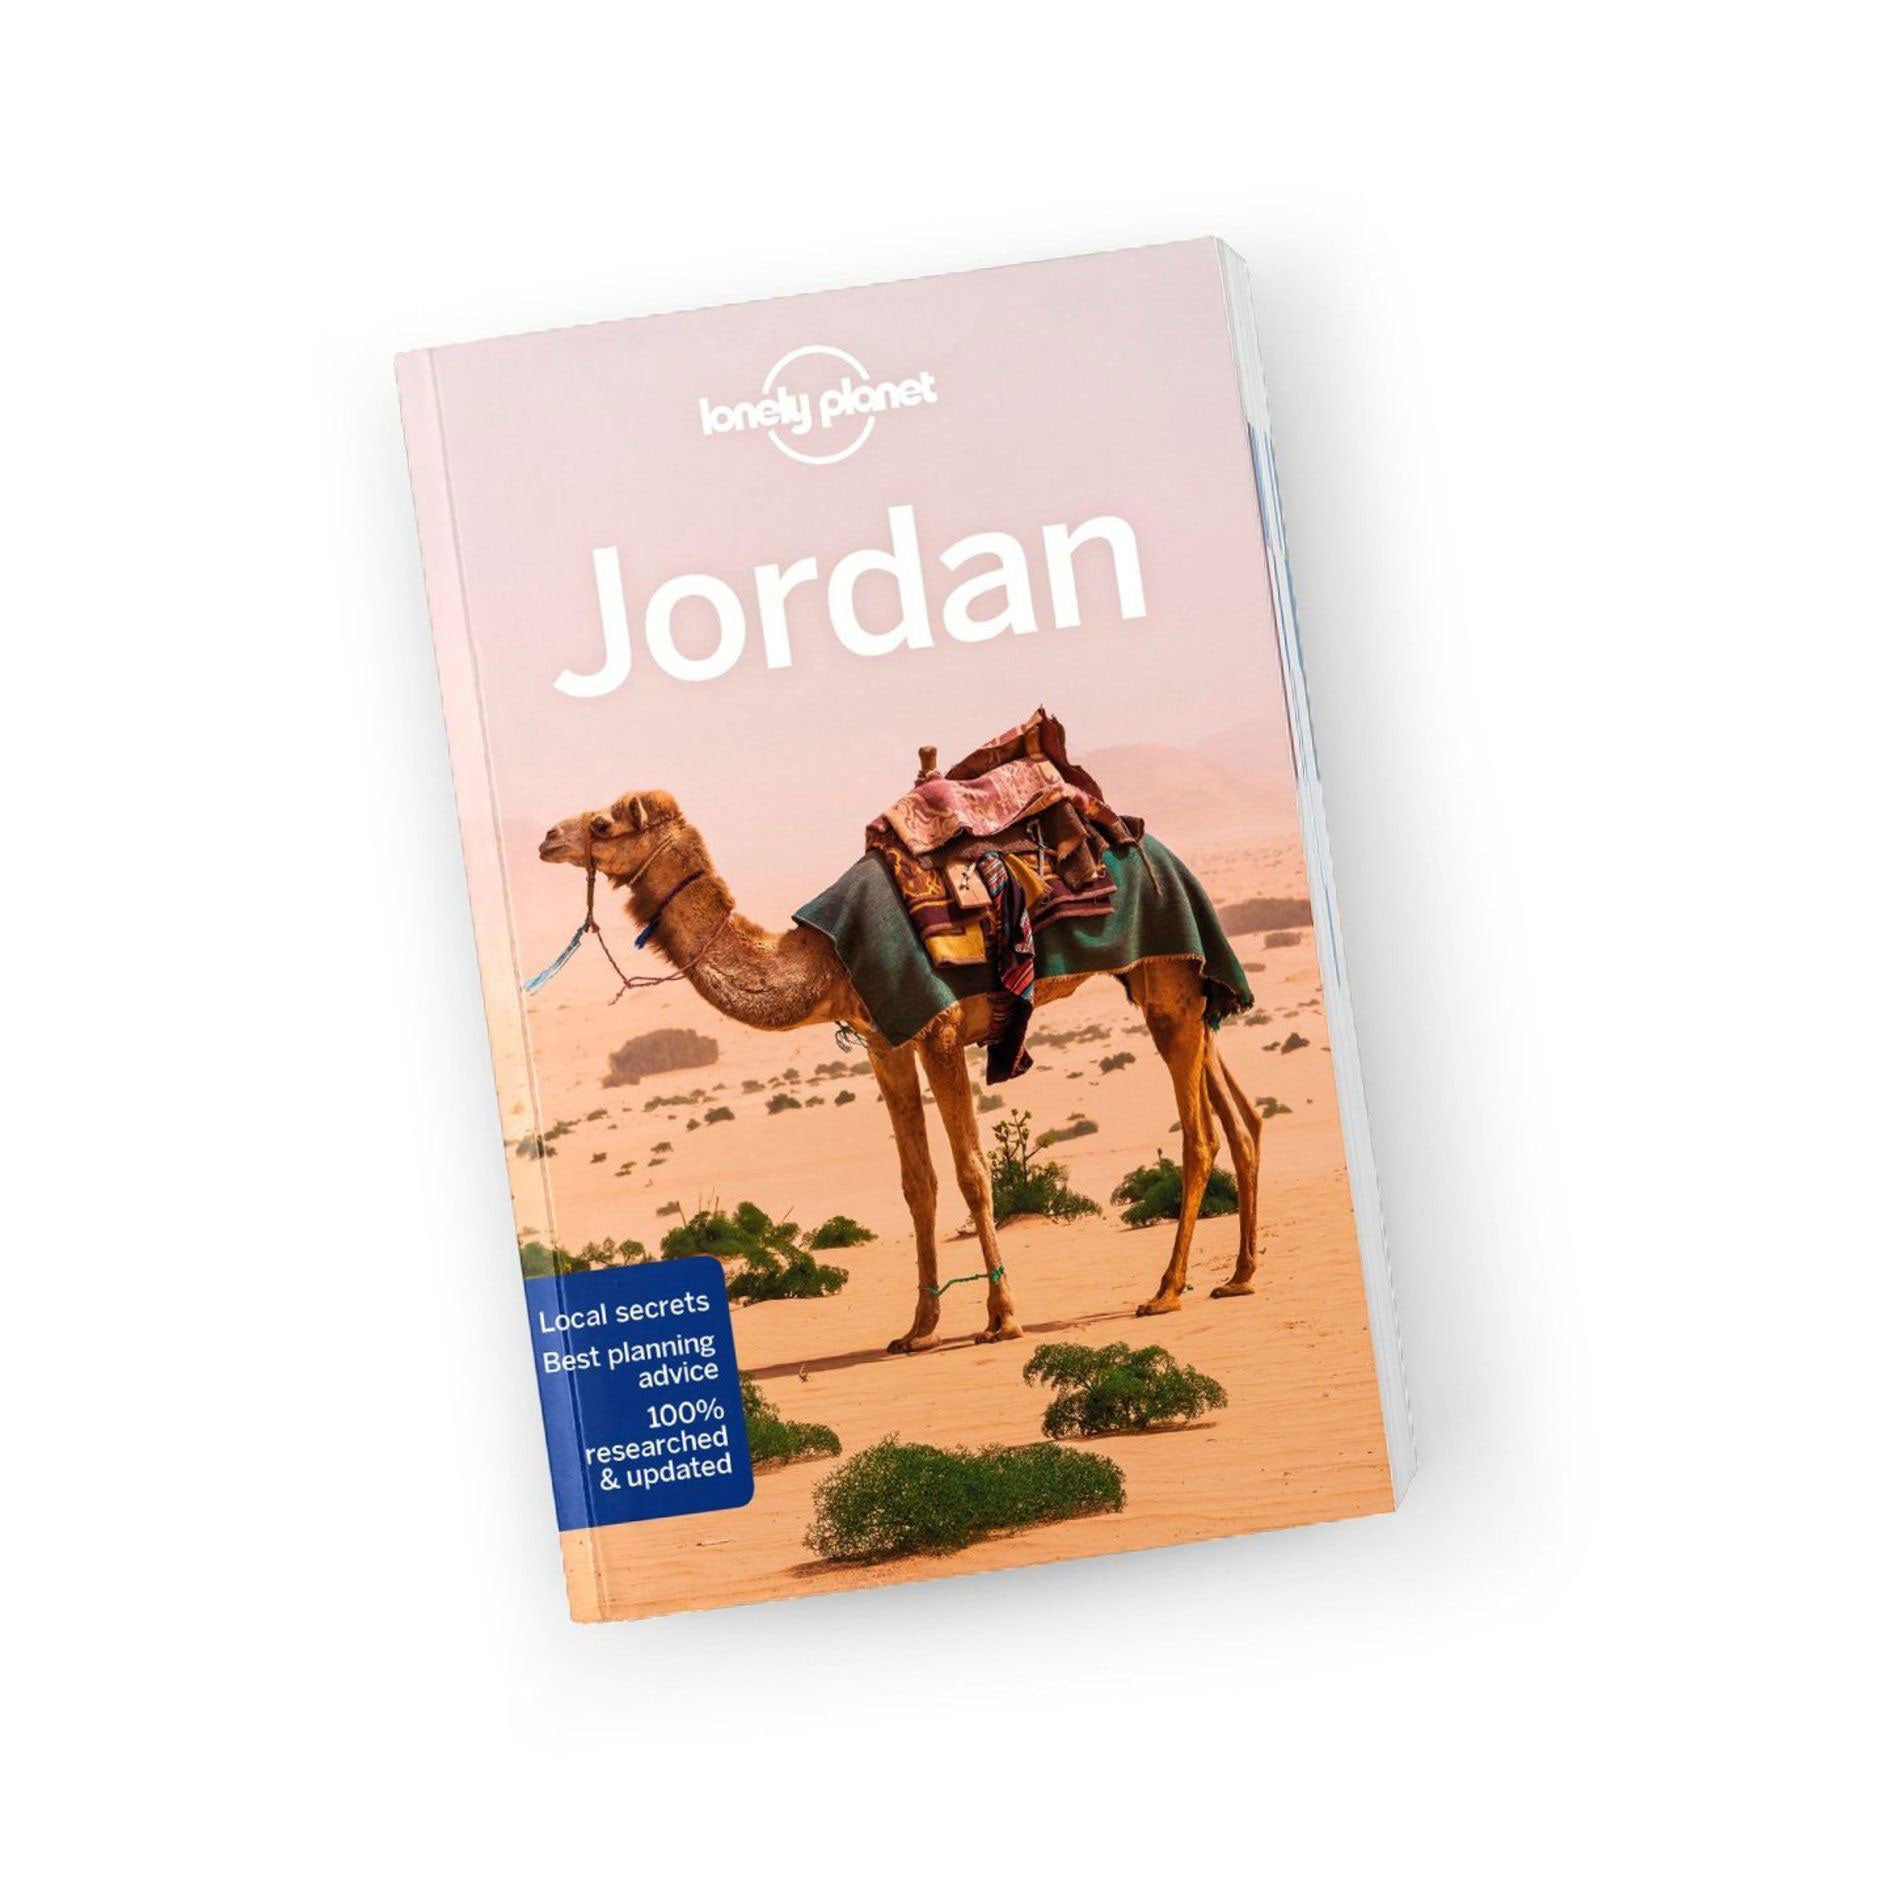 Jordan Lonely Planet